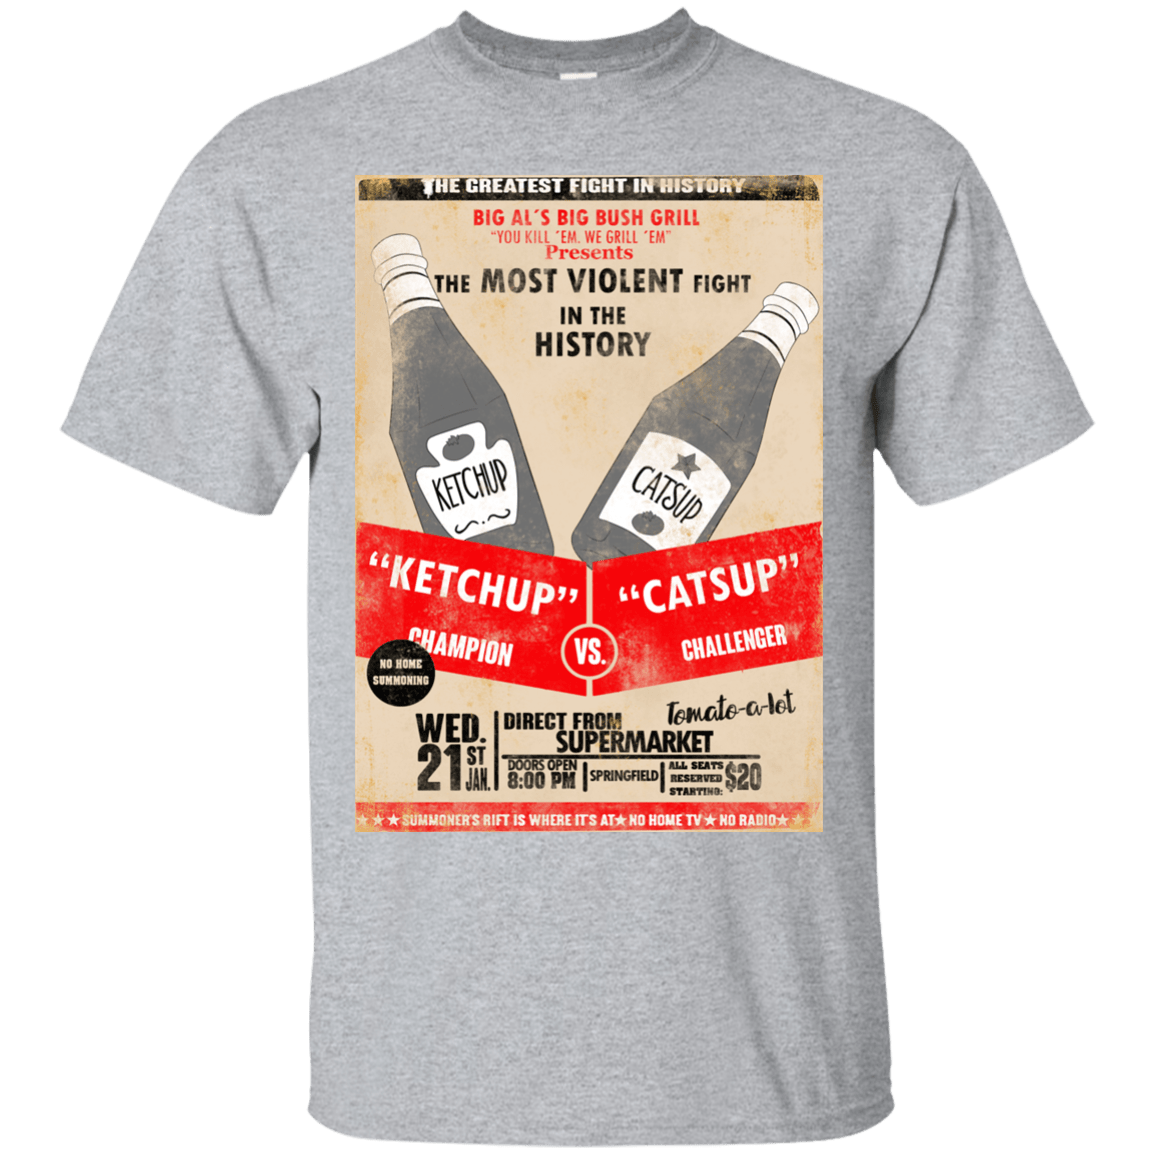 T-Shirts Sport Grey / S Ketchup vs Catsup T-Shirt